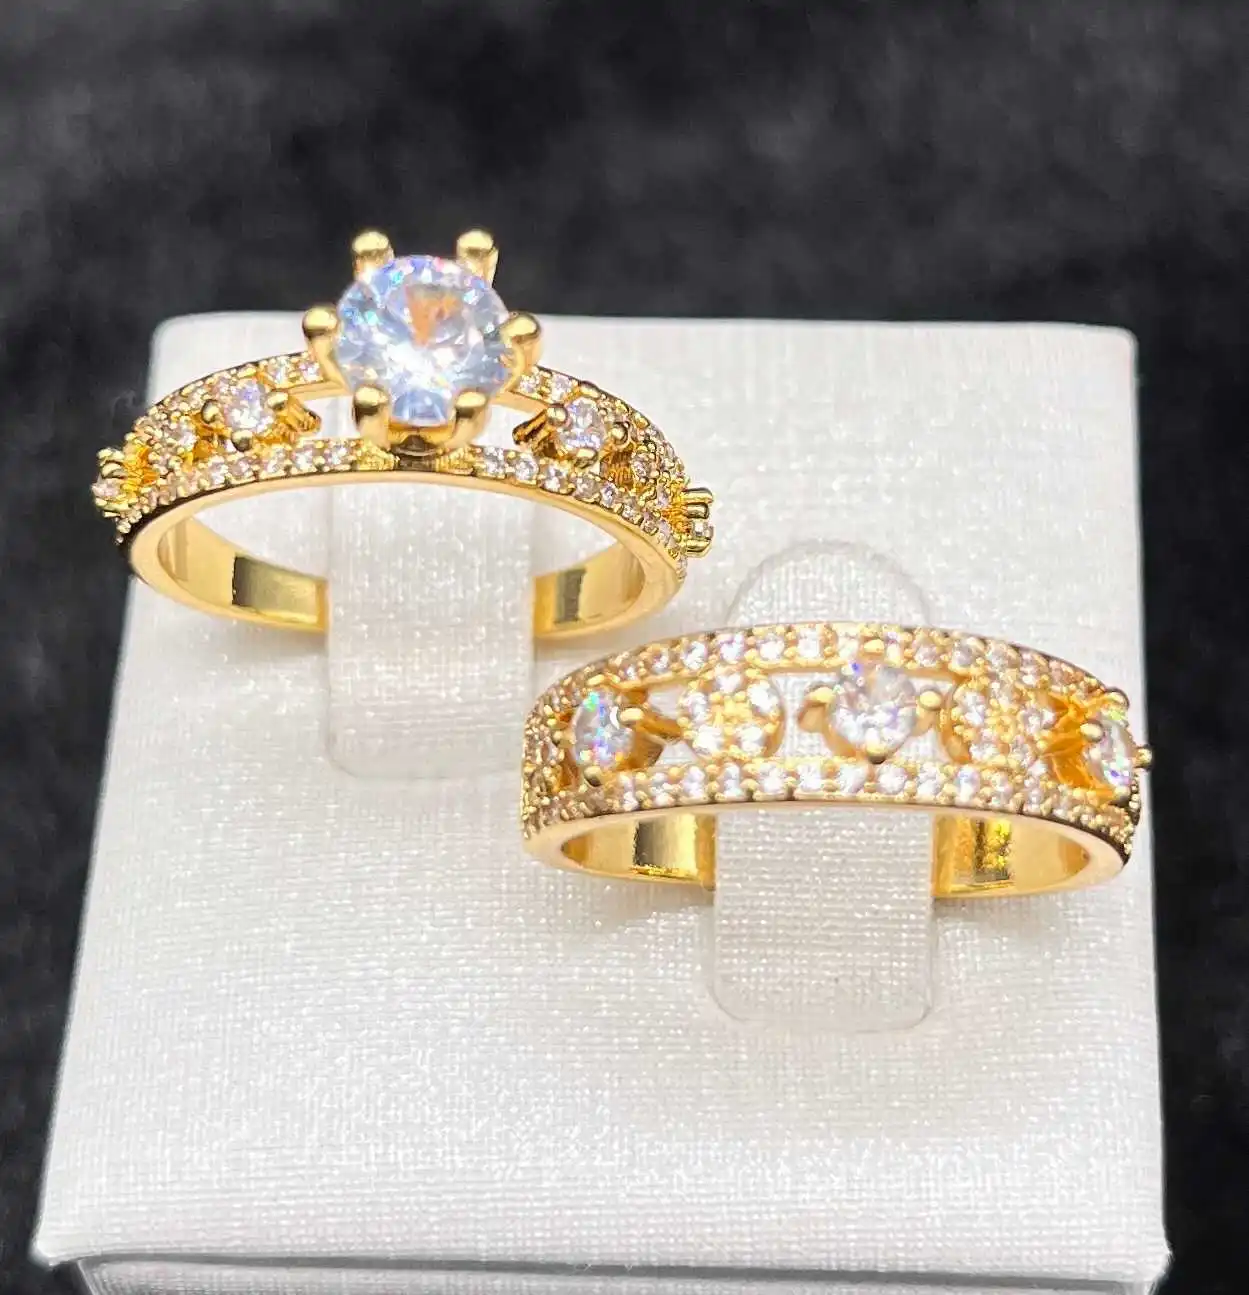 Custom Engagement Rings - Design your Own Ring Online